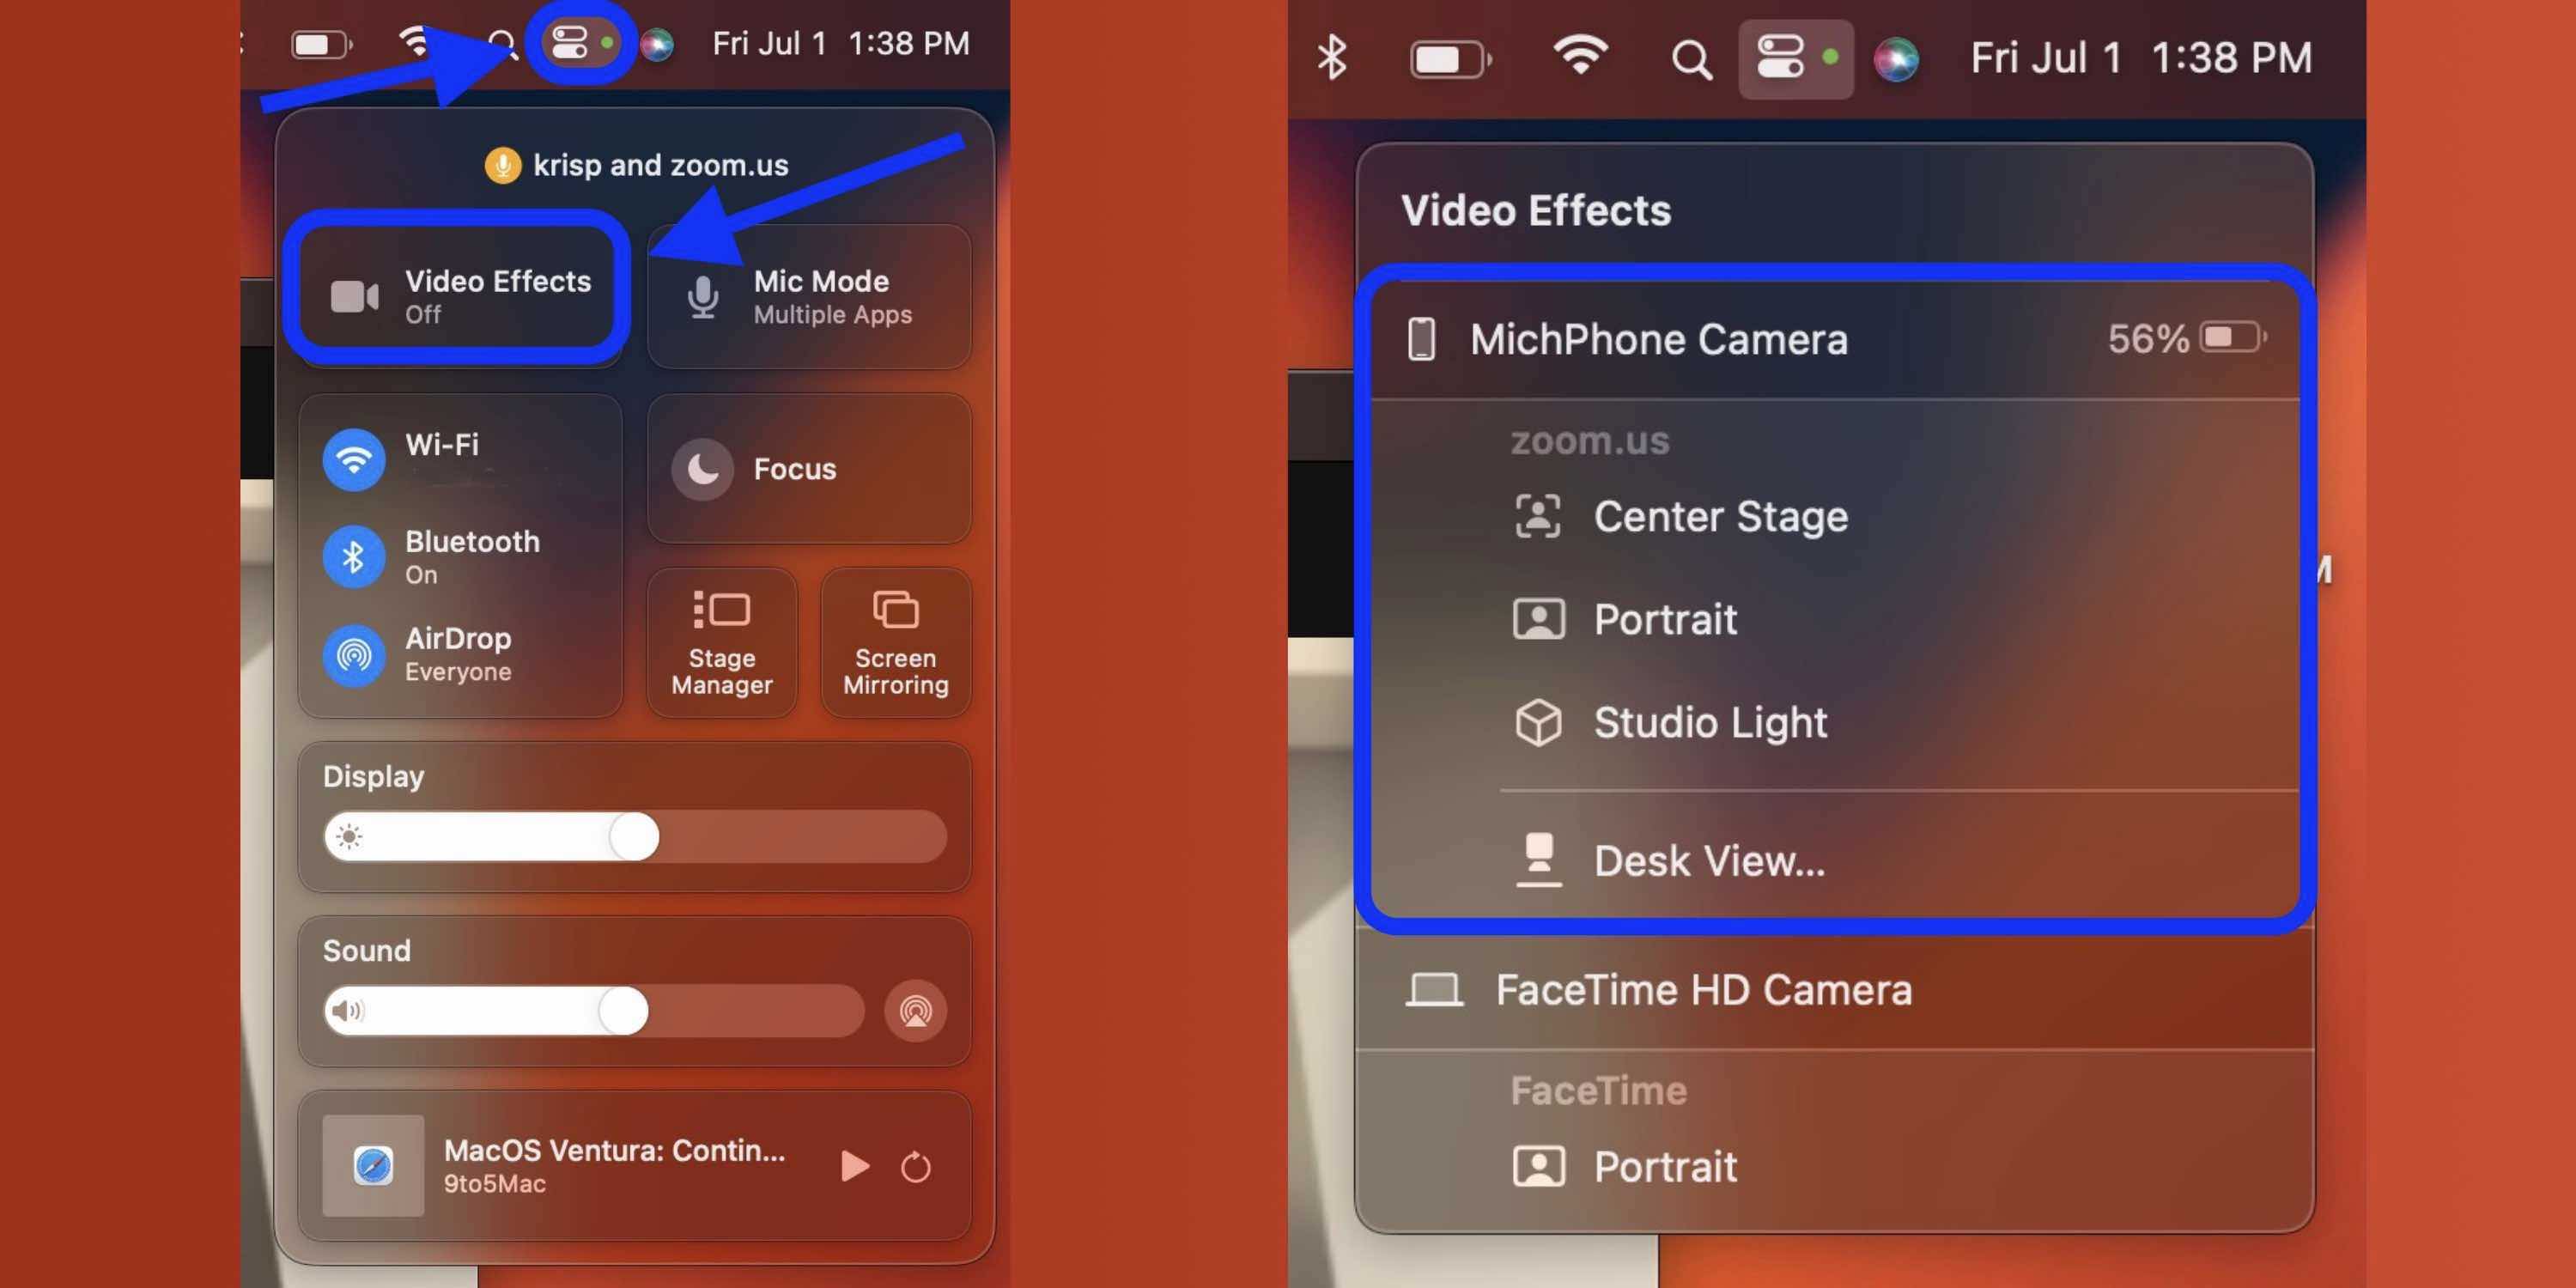  iPhone as Continuity Camera 3 for Mac webcam